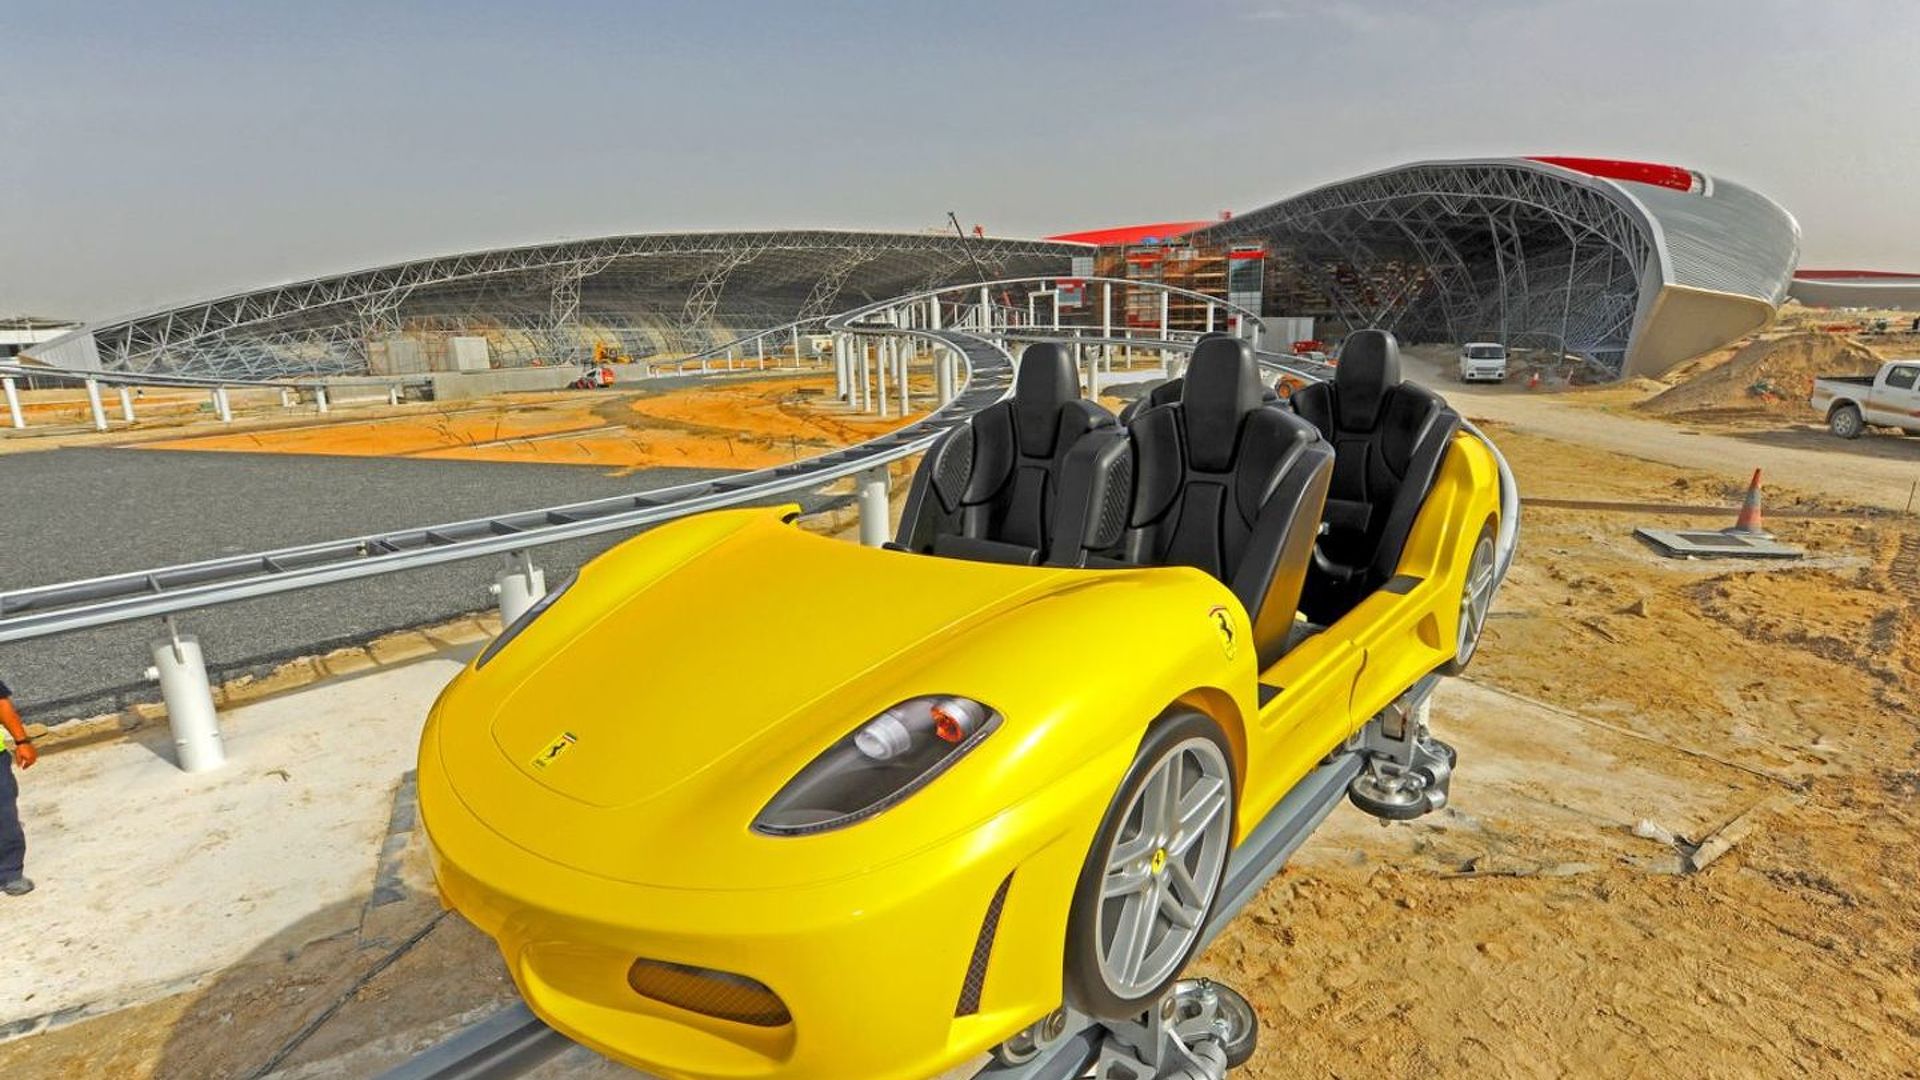 Ferrari World Abu Dhabi GT Roller Coaster First Image Released